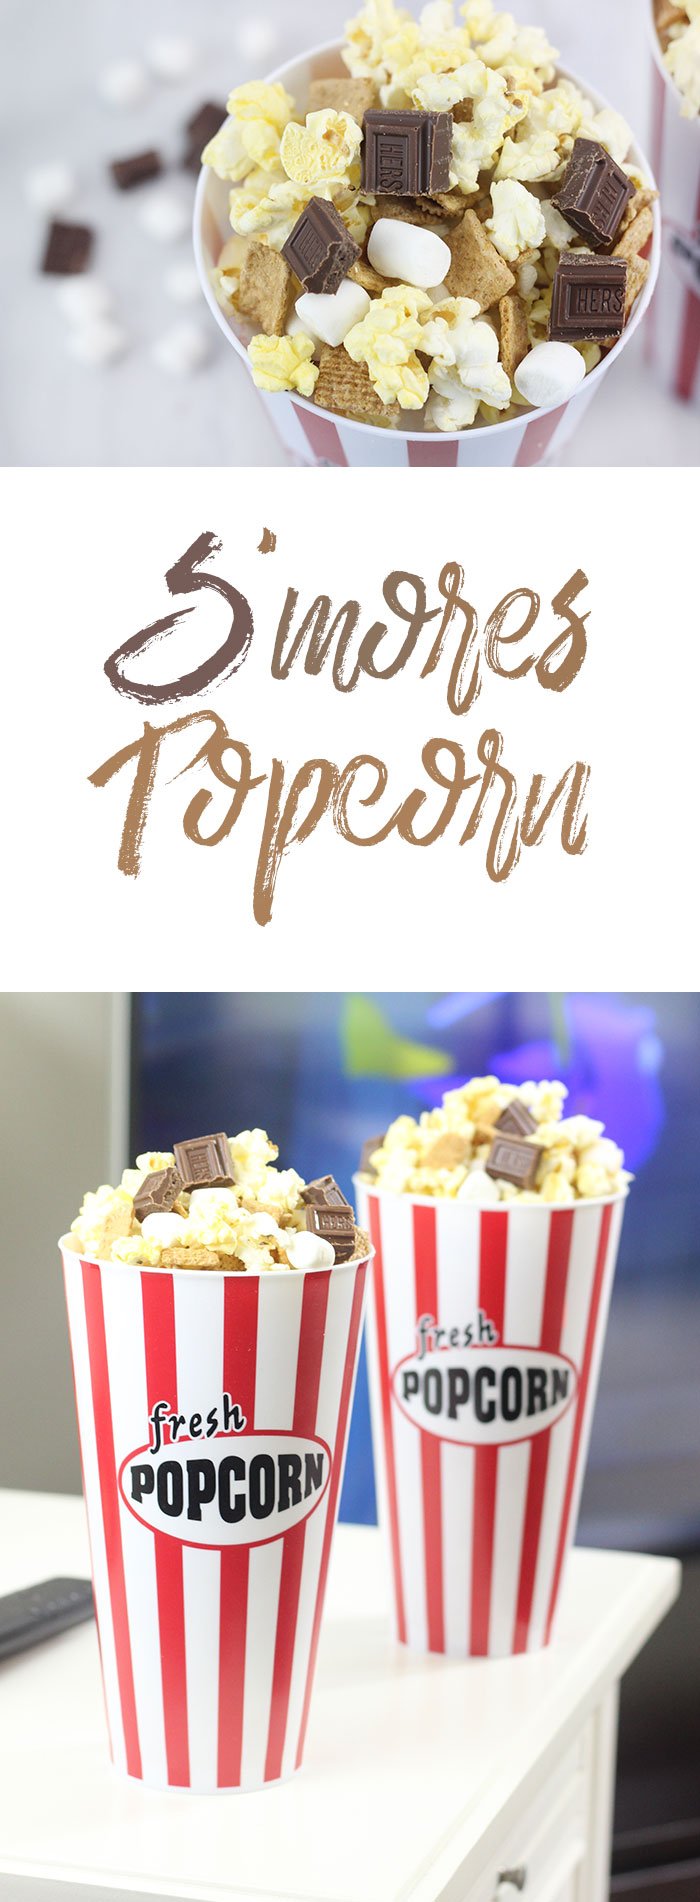 S'mores Popcorn made easy & impromptu movie night ideas.